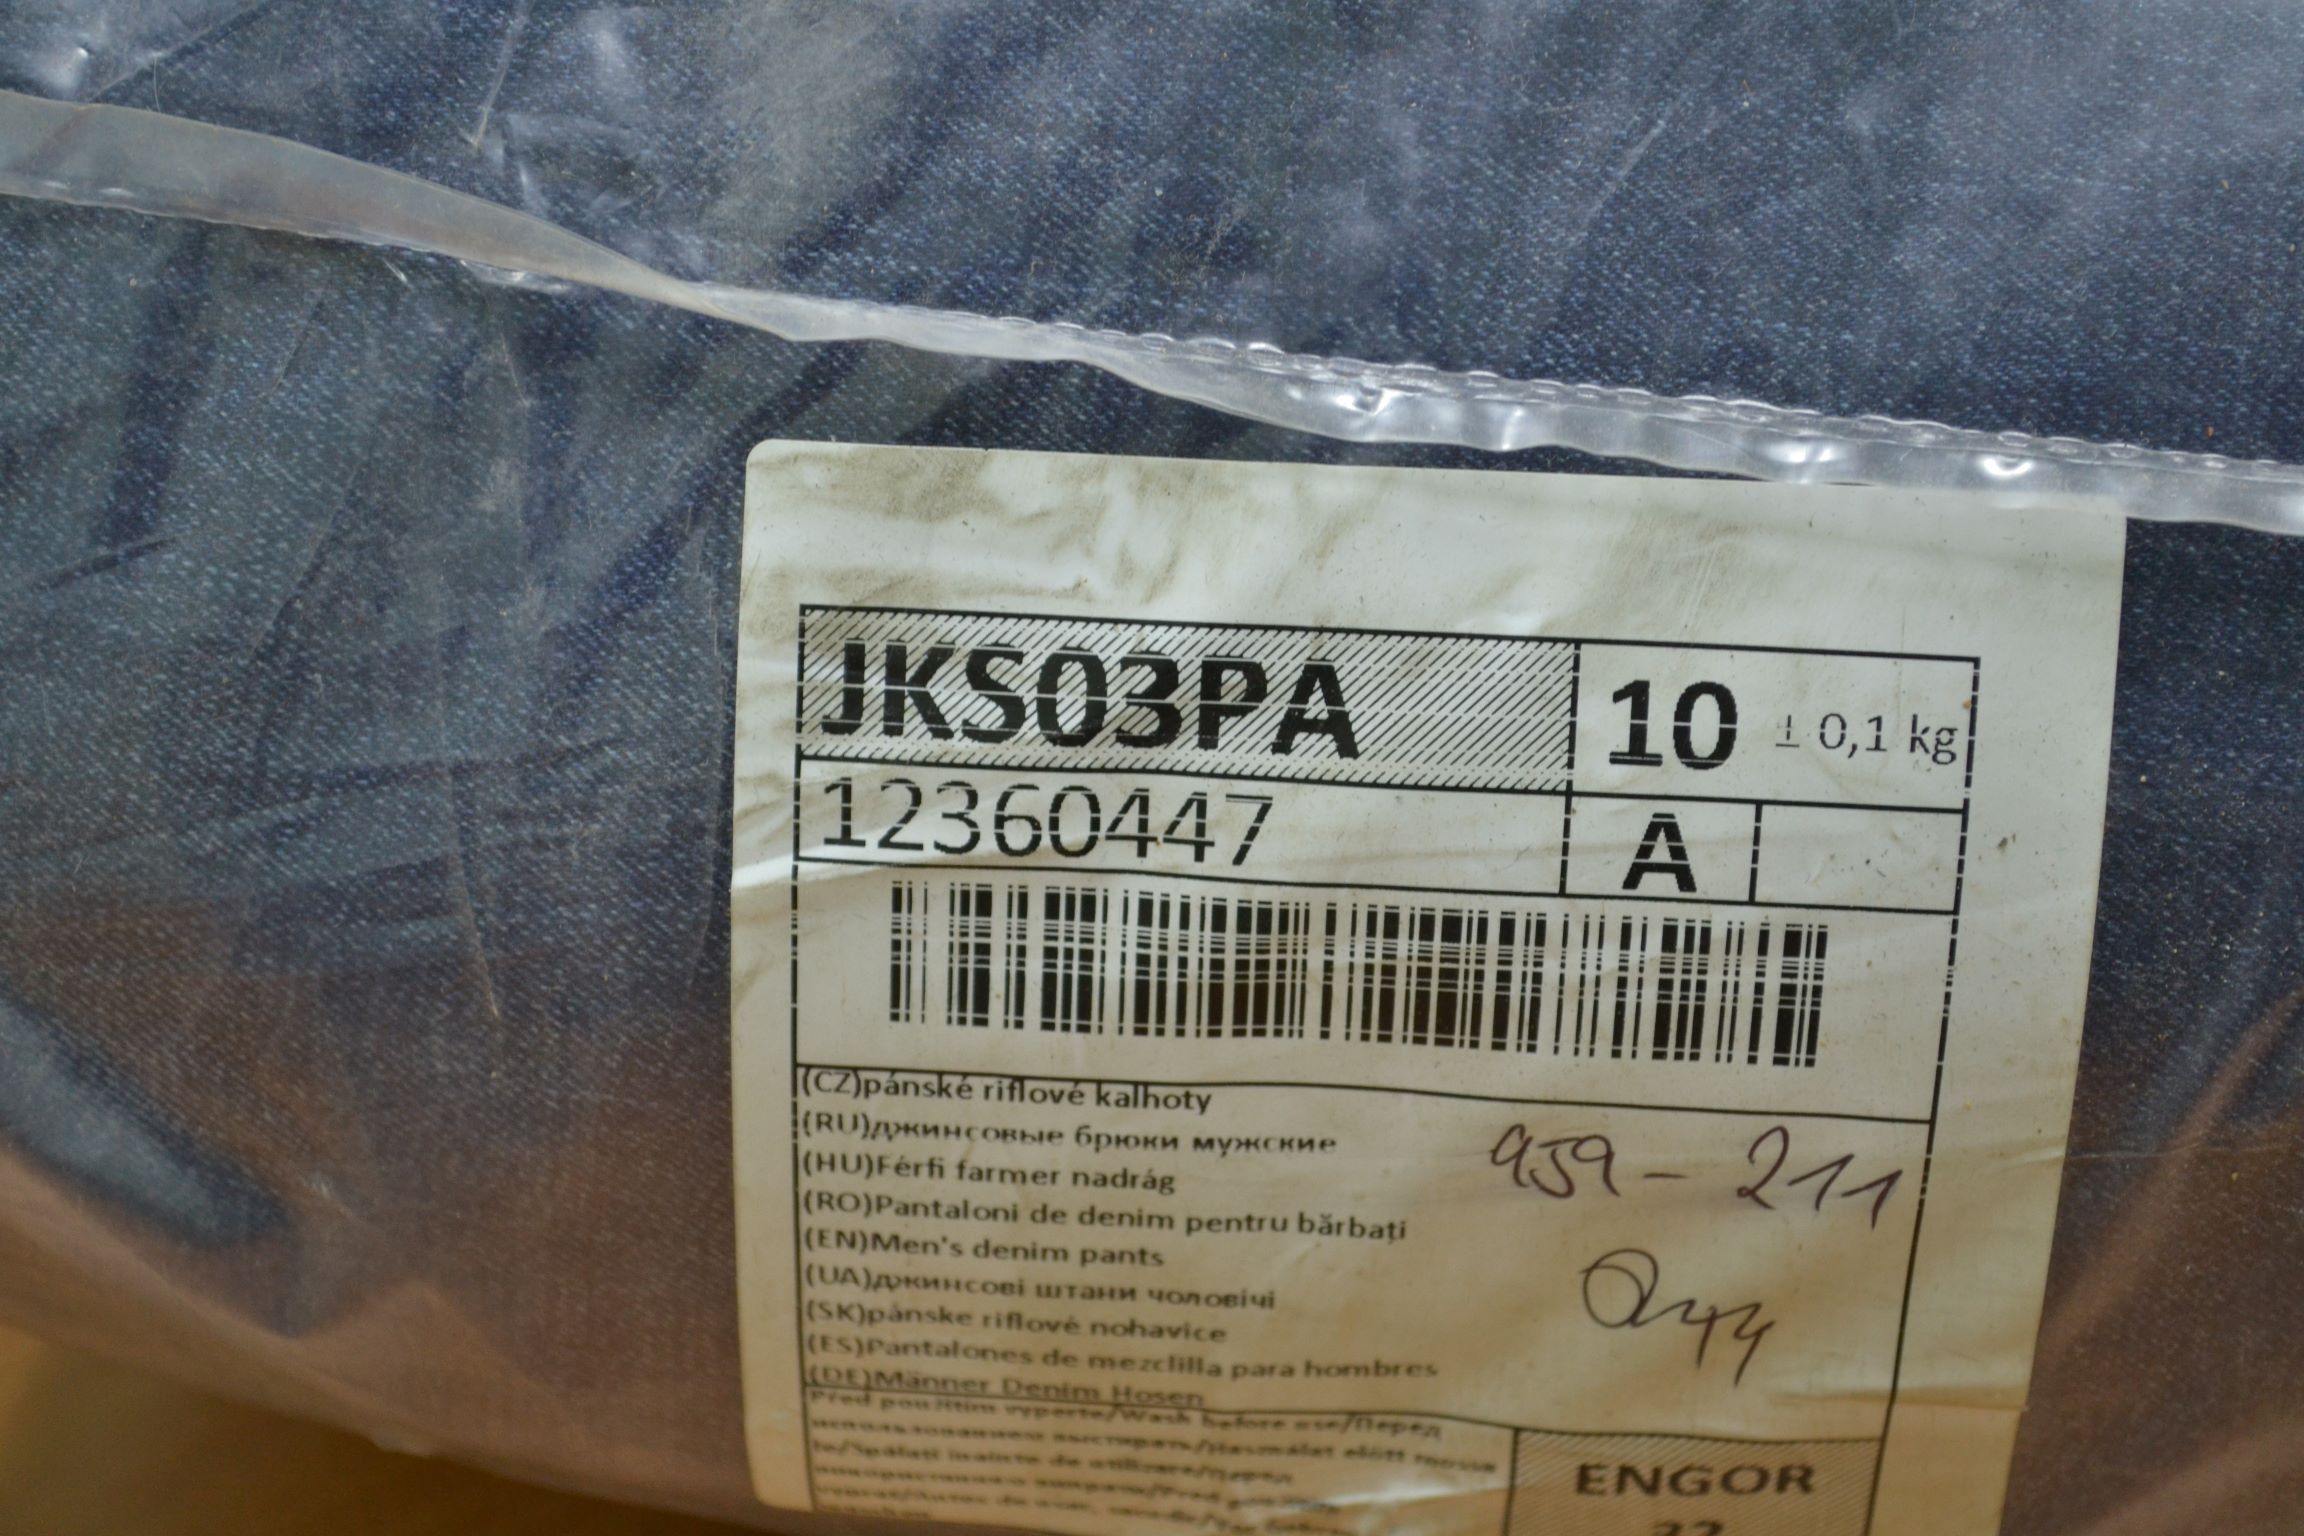 JKS03PA Джинсовые брюки мужские ; код мешка 12360447